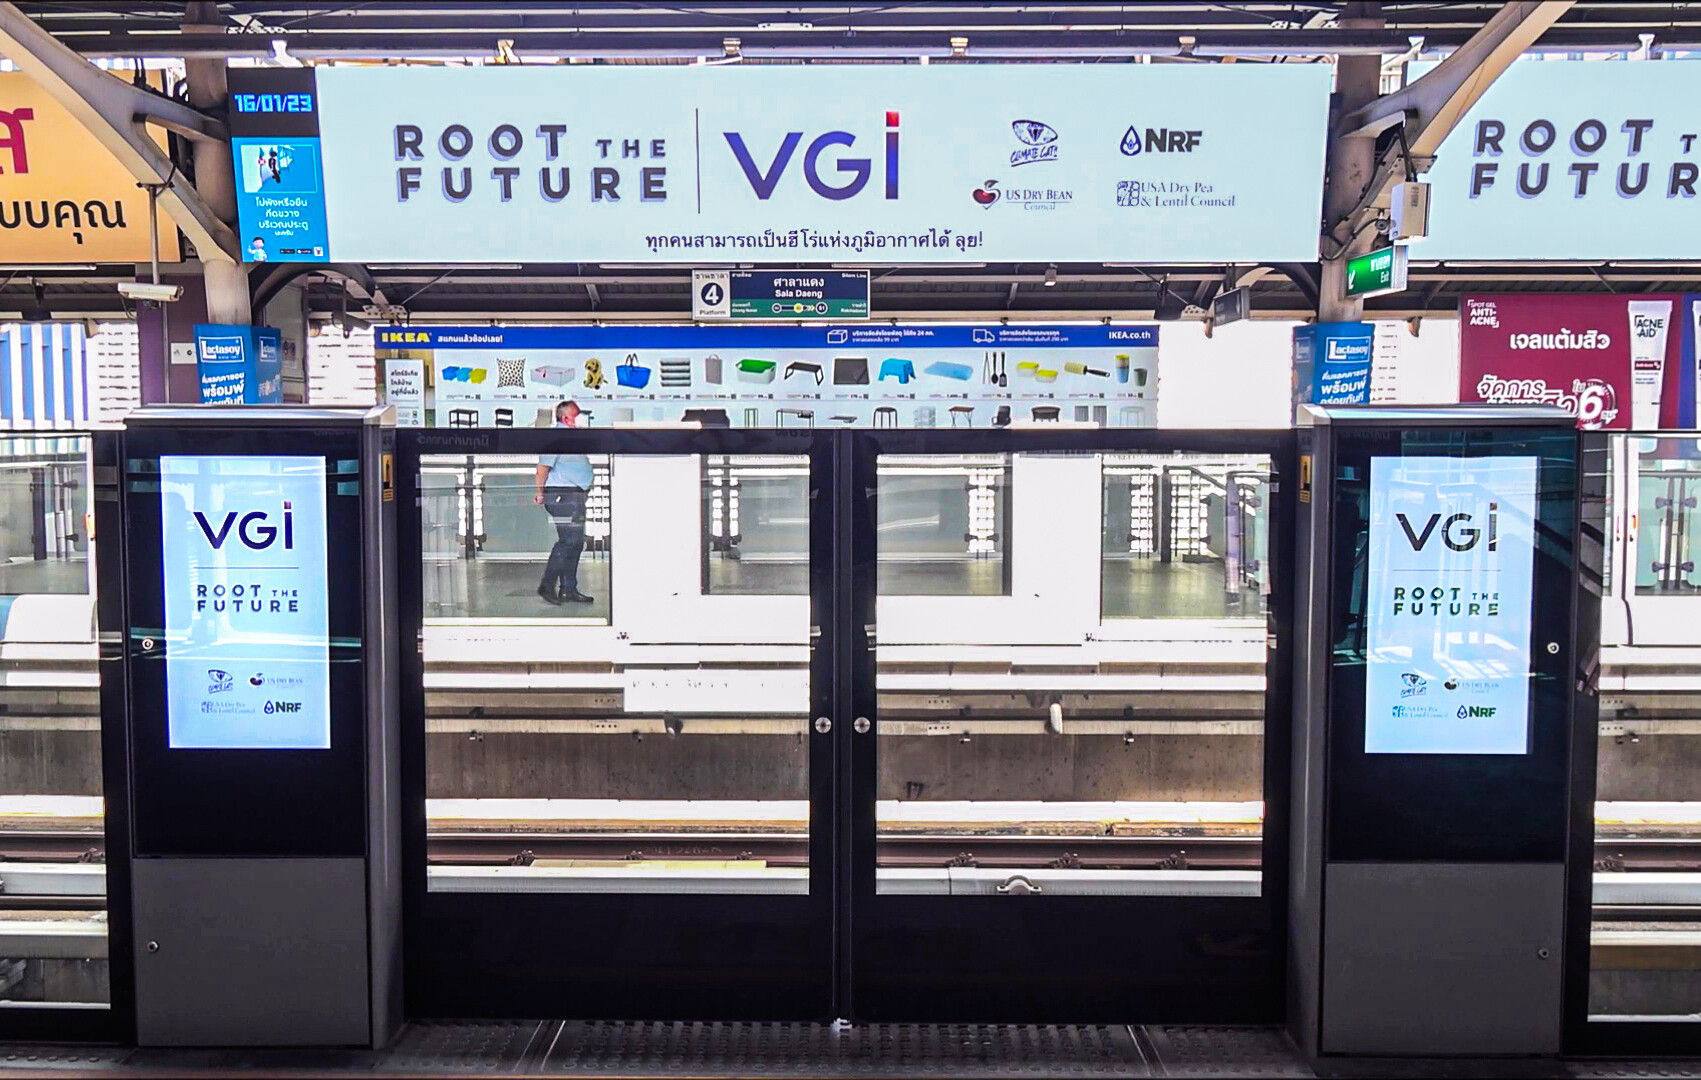 VGI ร่วมกับ Root the Future ปลุกจิตสำนึกคนไทย ผ่านแคมเปญ "Climate Hero" ผ่านสื่อจอดิจิทัลบนสถานีบีทีเอส